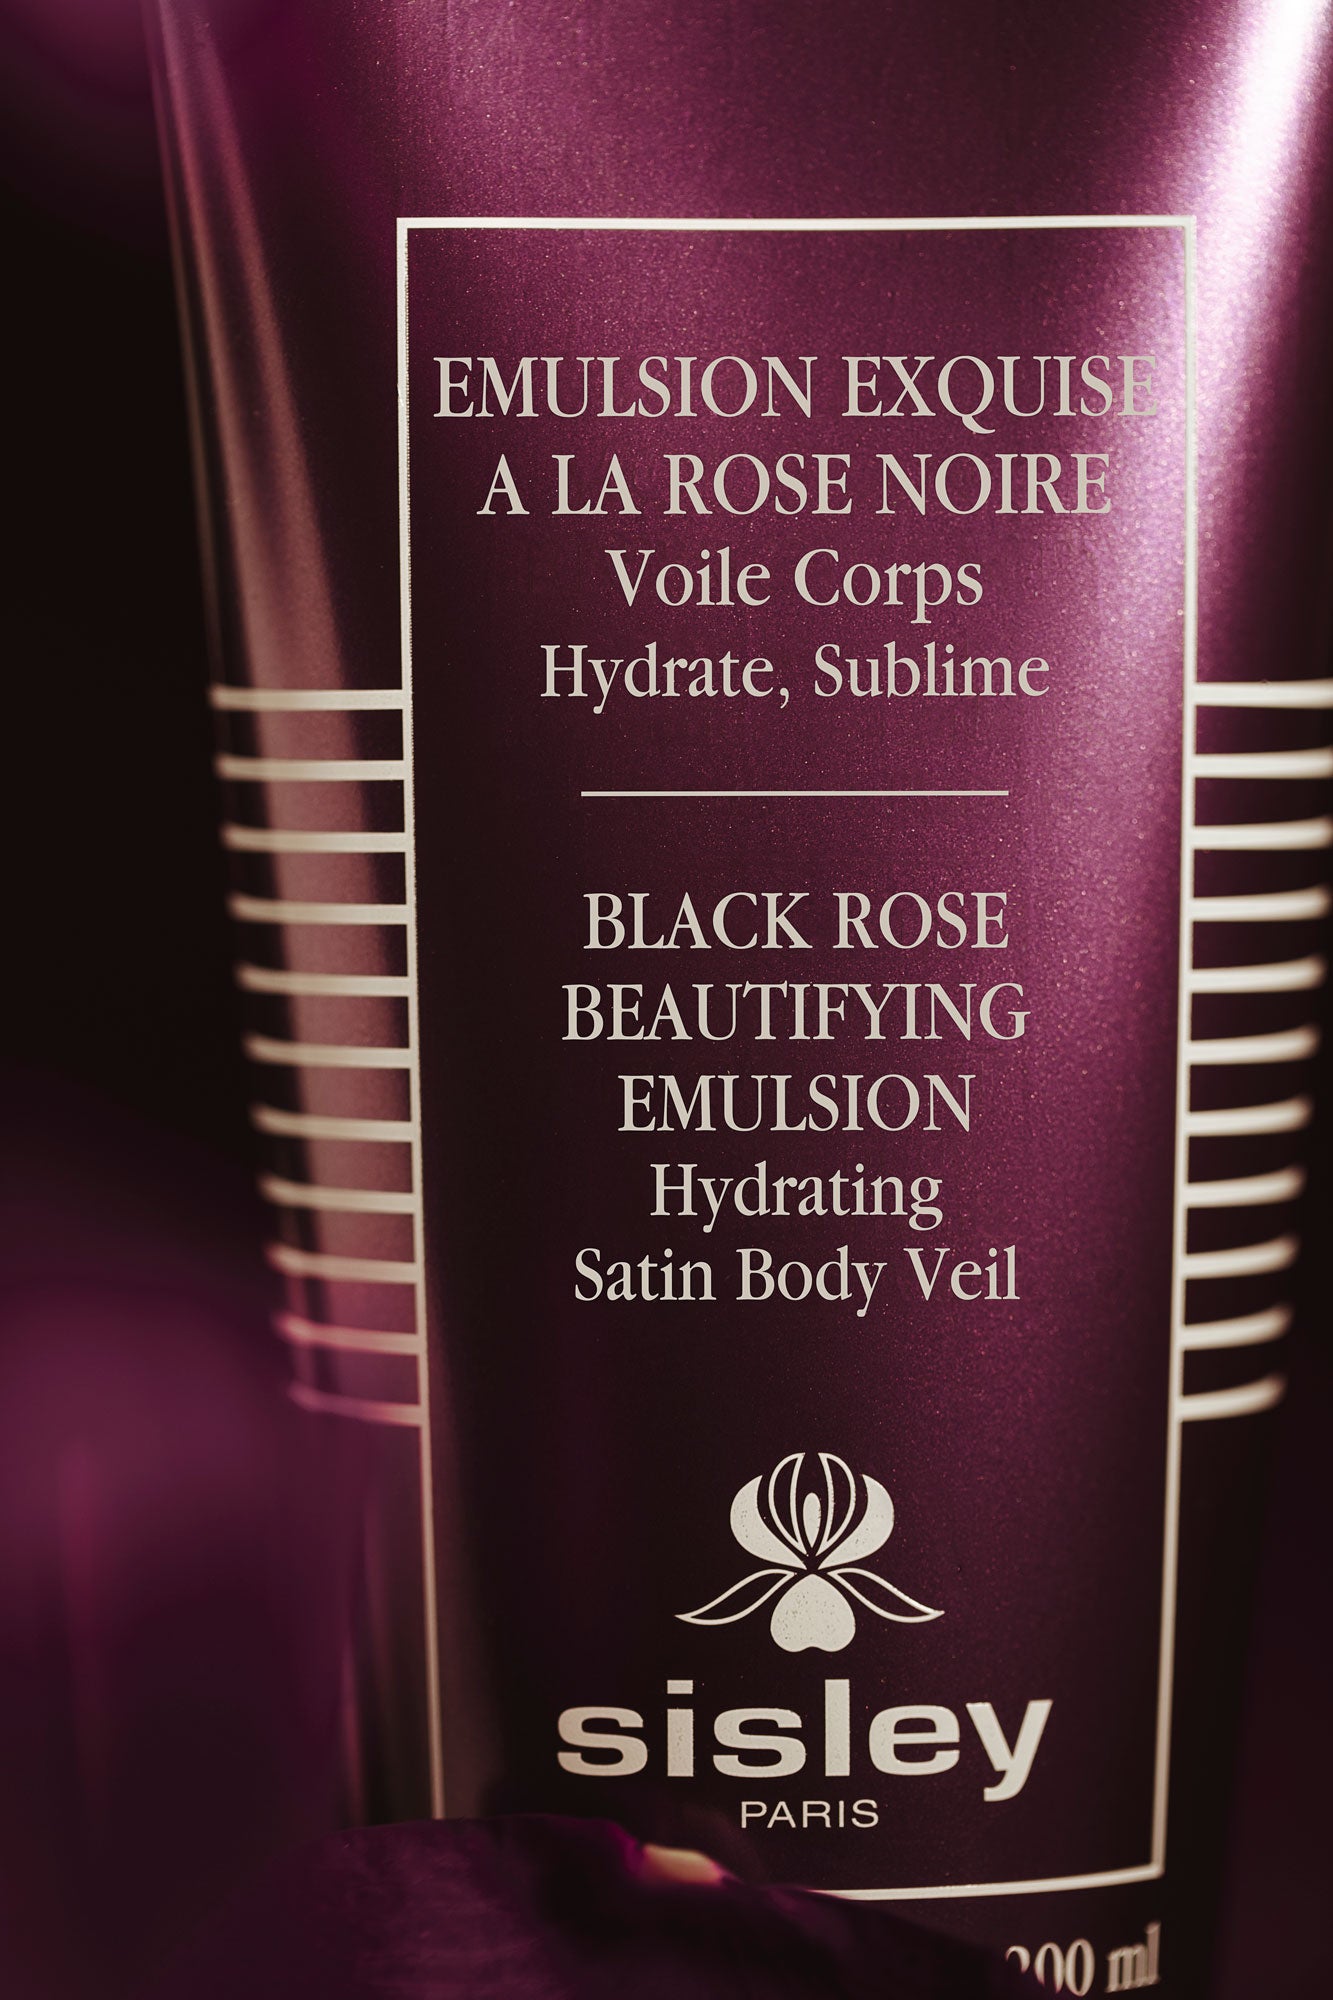 Black Rose Beautifying Emulsion